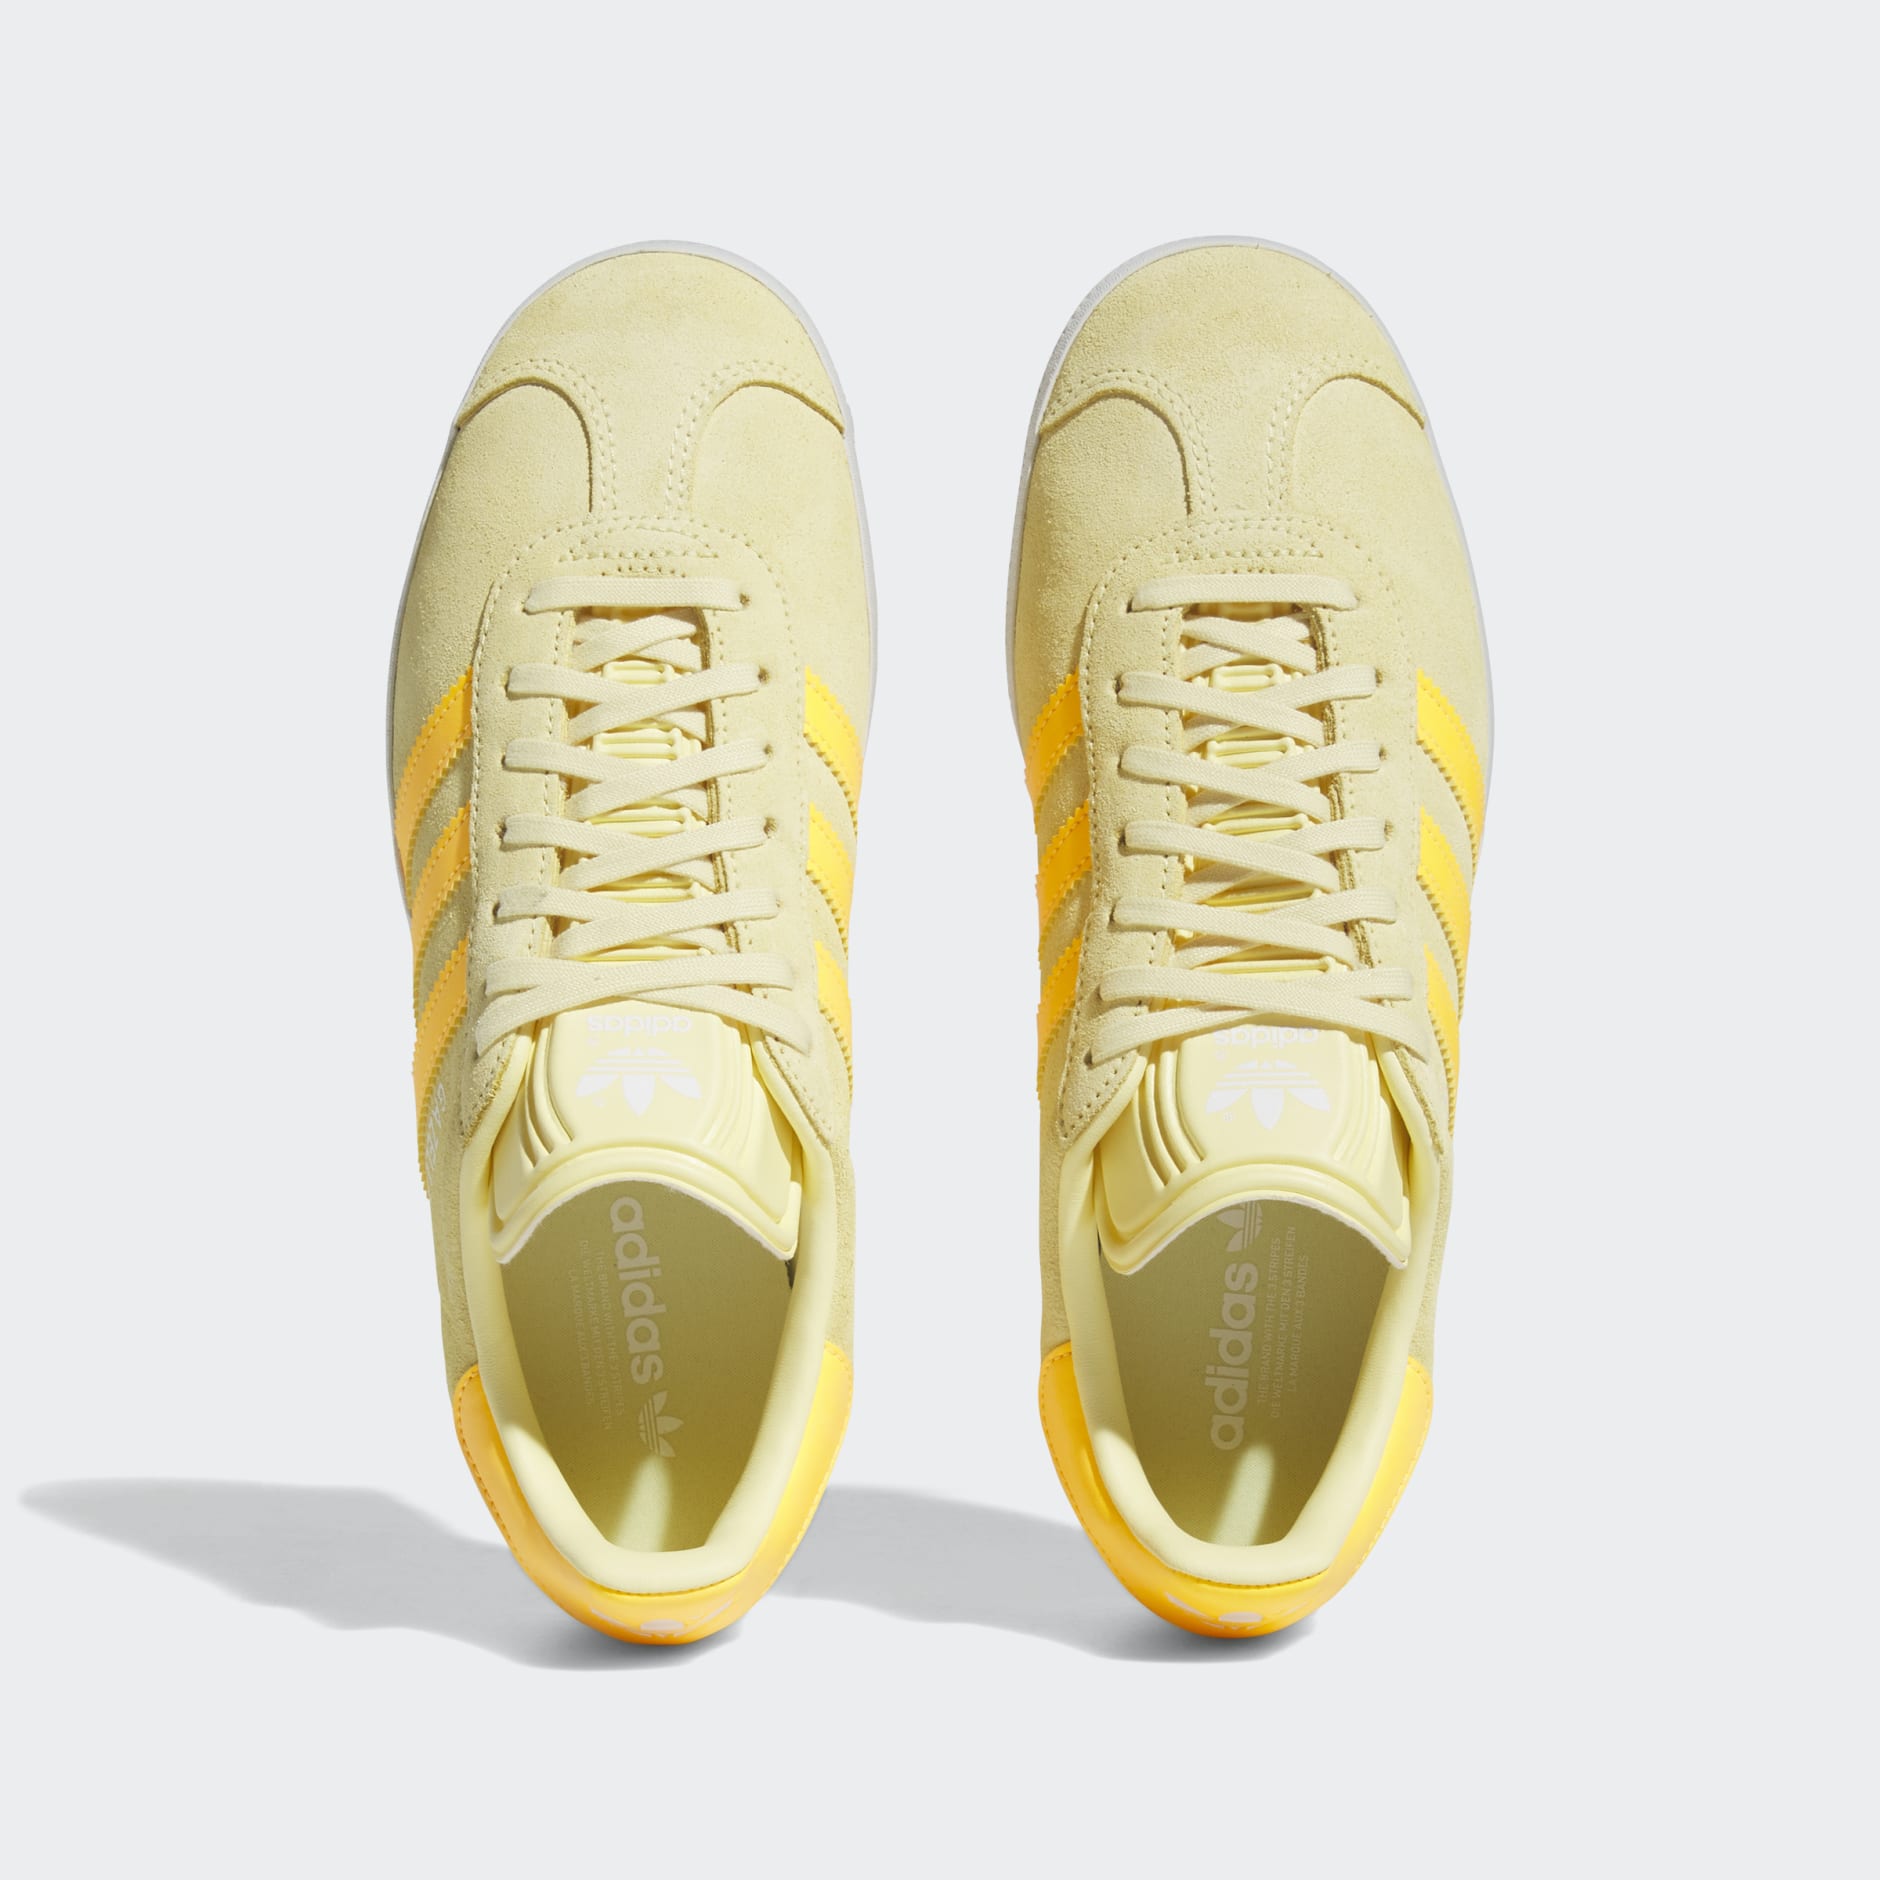 adidas originals gazelle yellow